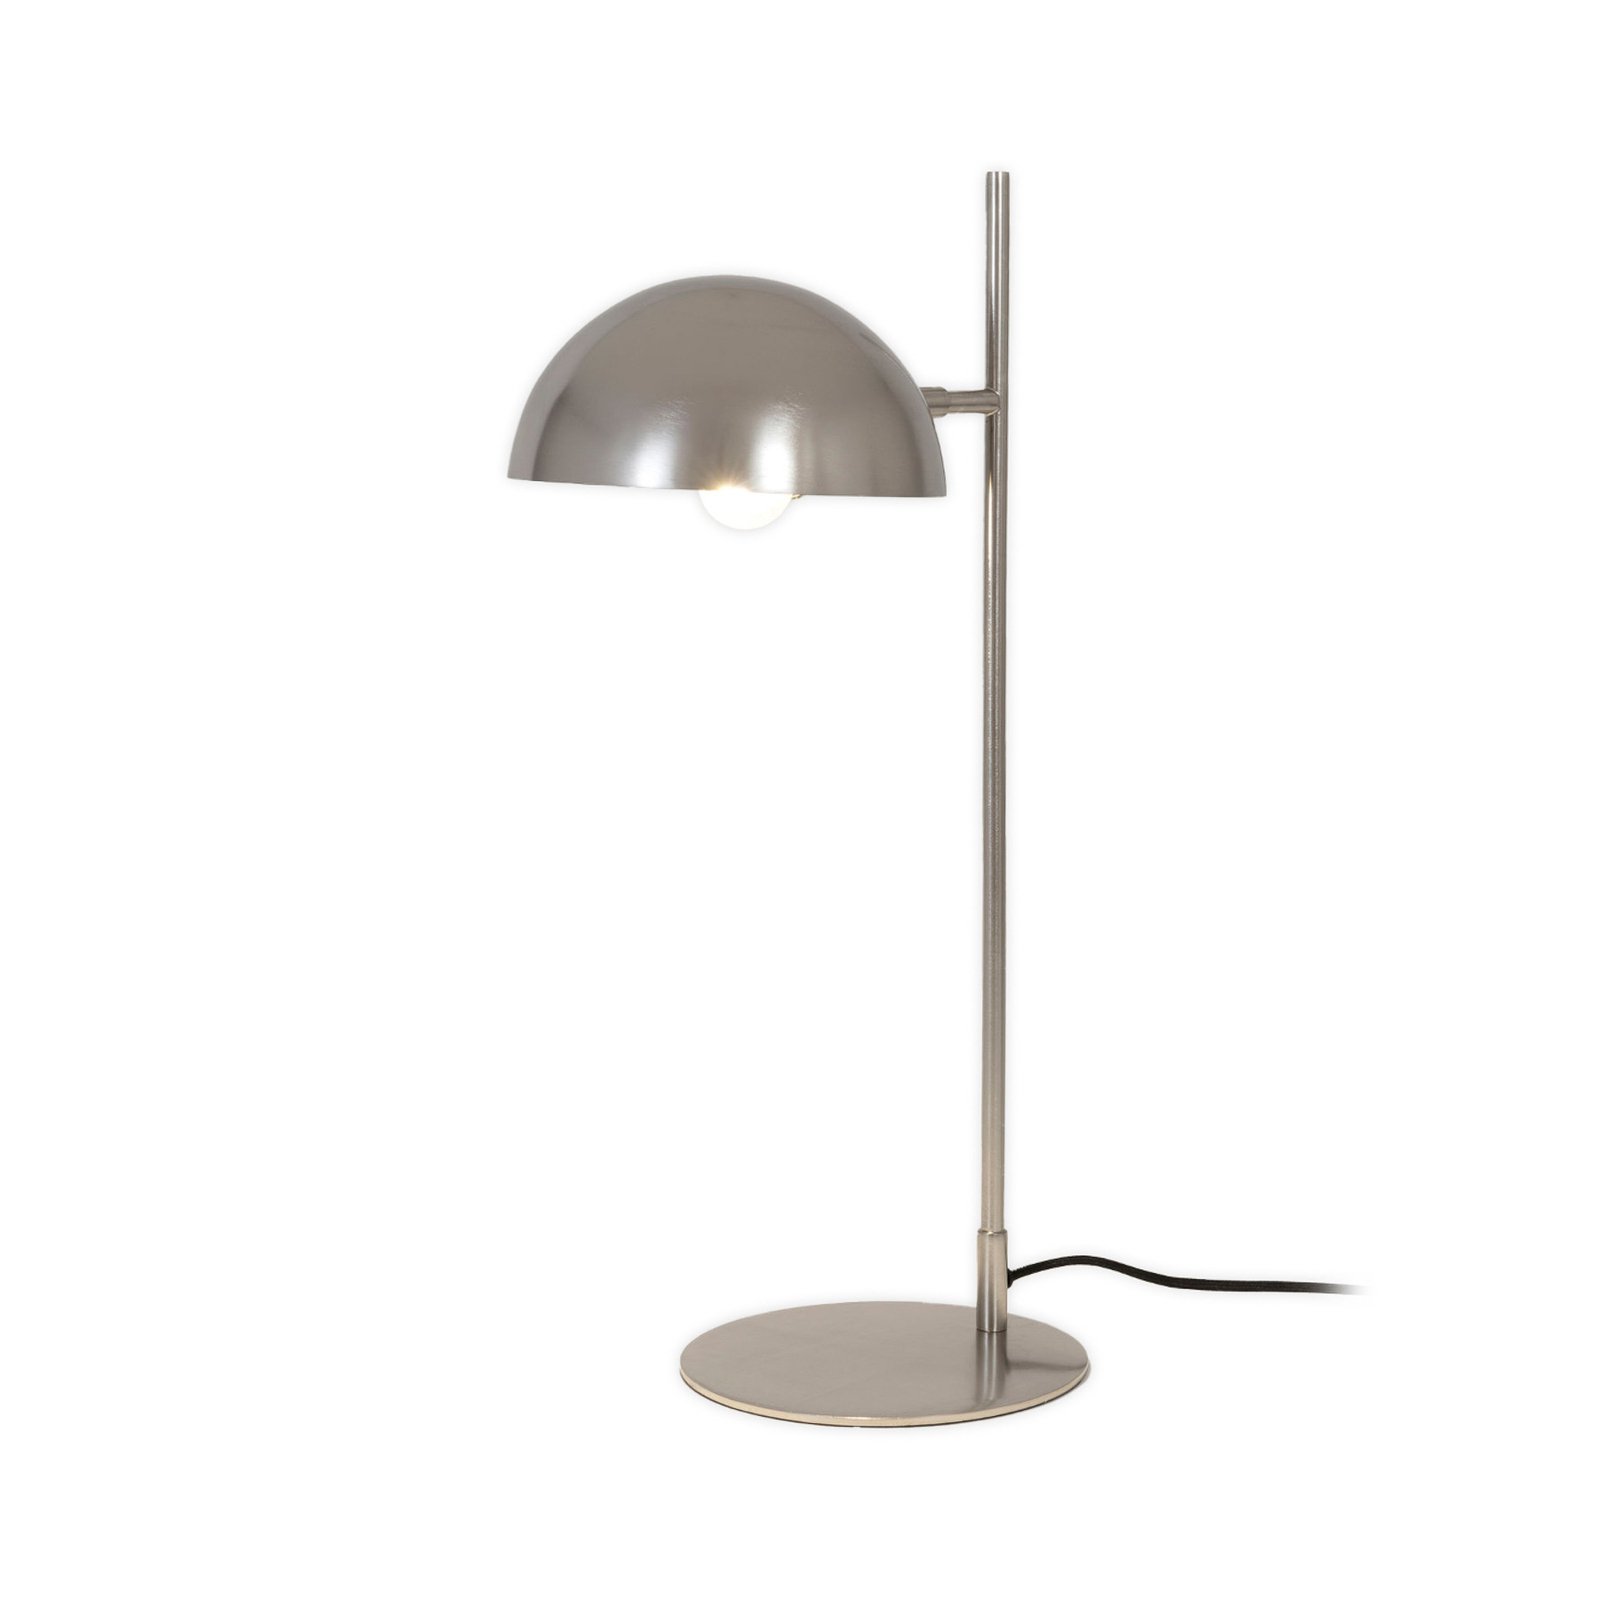 Miro bordlampe, sølvfarvet, højde 58 cm, jern/messing